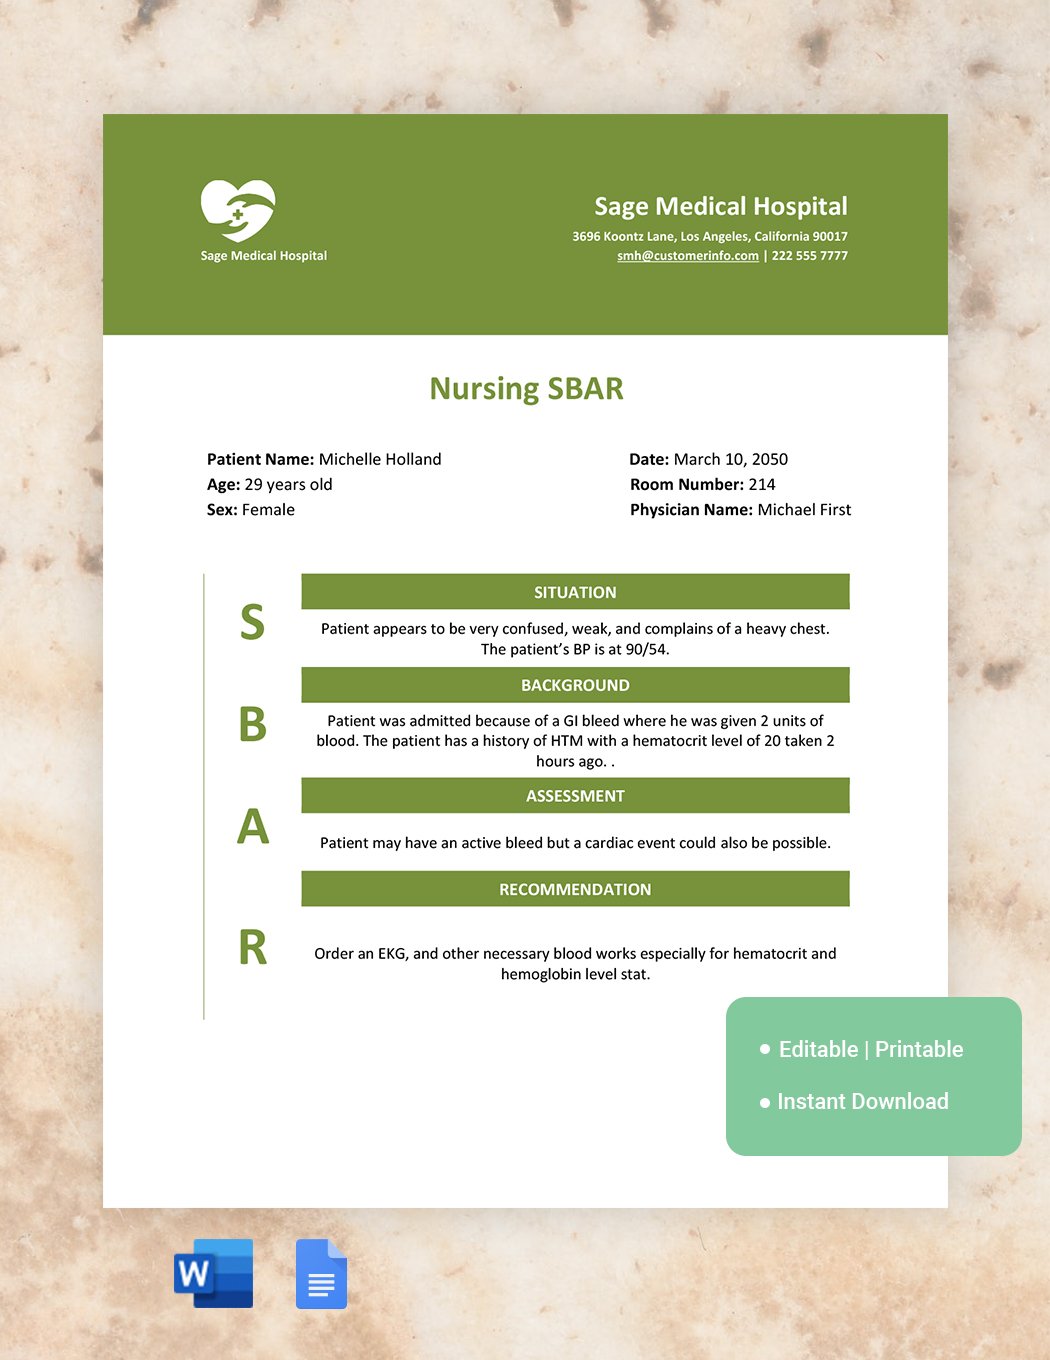 Nursing SBAR Template